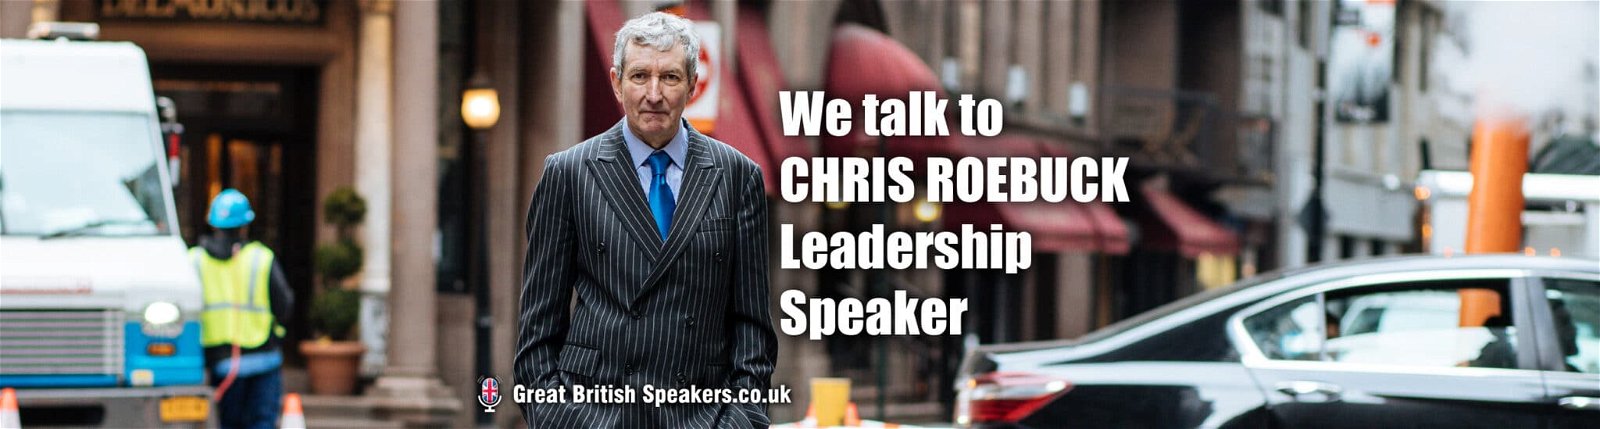 Book leadership business speaker Prof Chris Roebuck at agent Great British Speakers